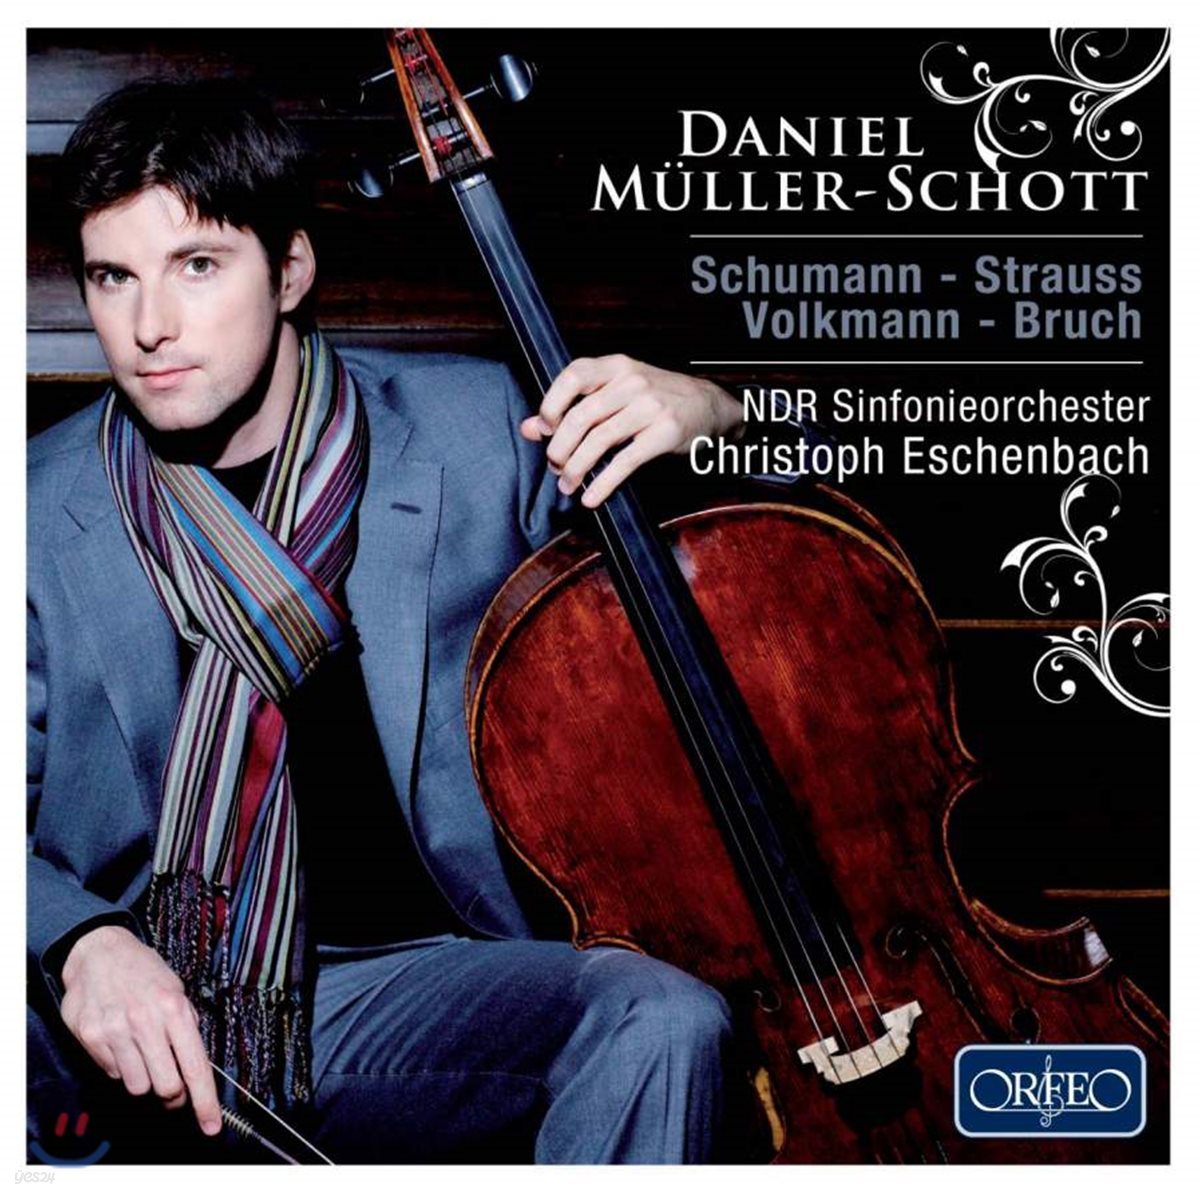 Daniel Muller-Schott 다니엘 뮐러 쇼트 첼로 협주곡 - 슈만 / 슈트라우스 / 볼크만 & 블로흐